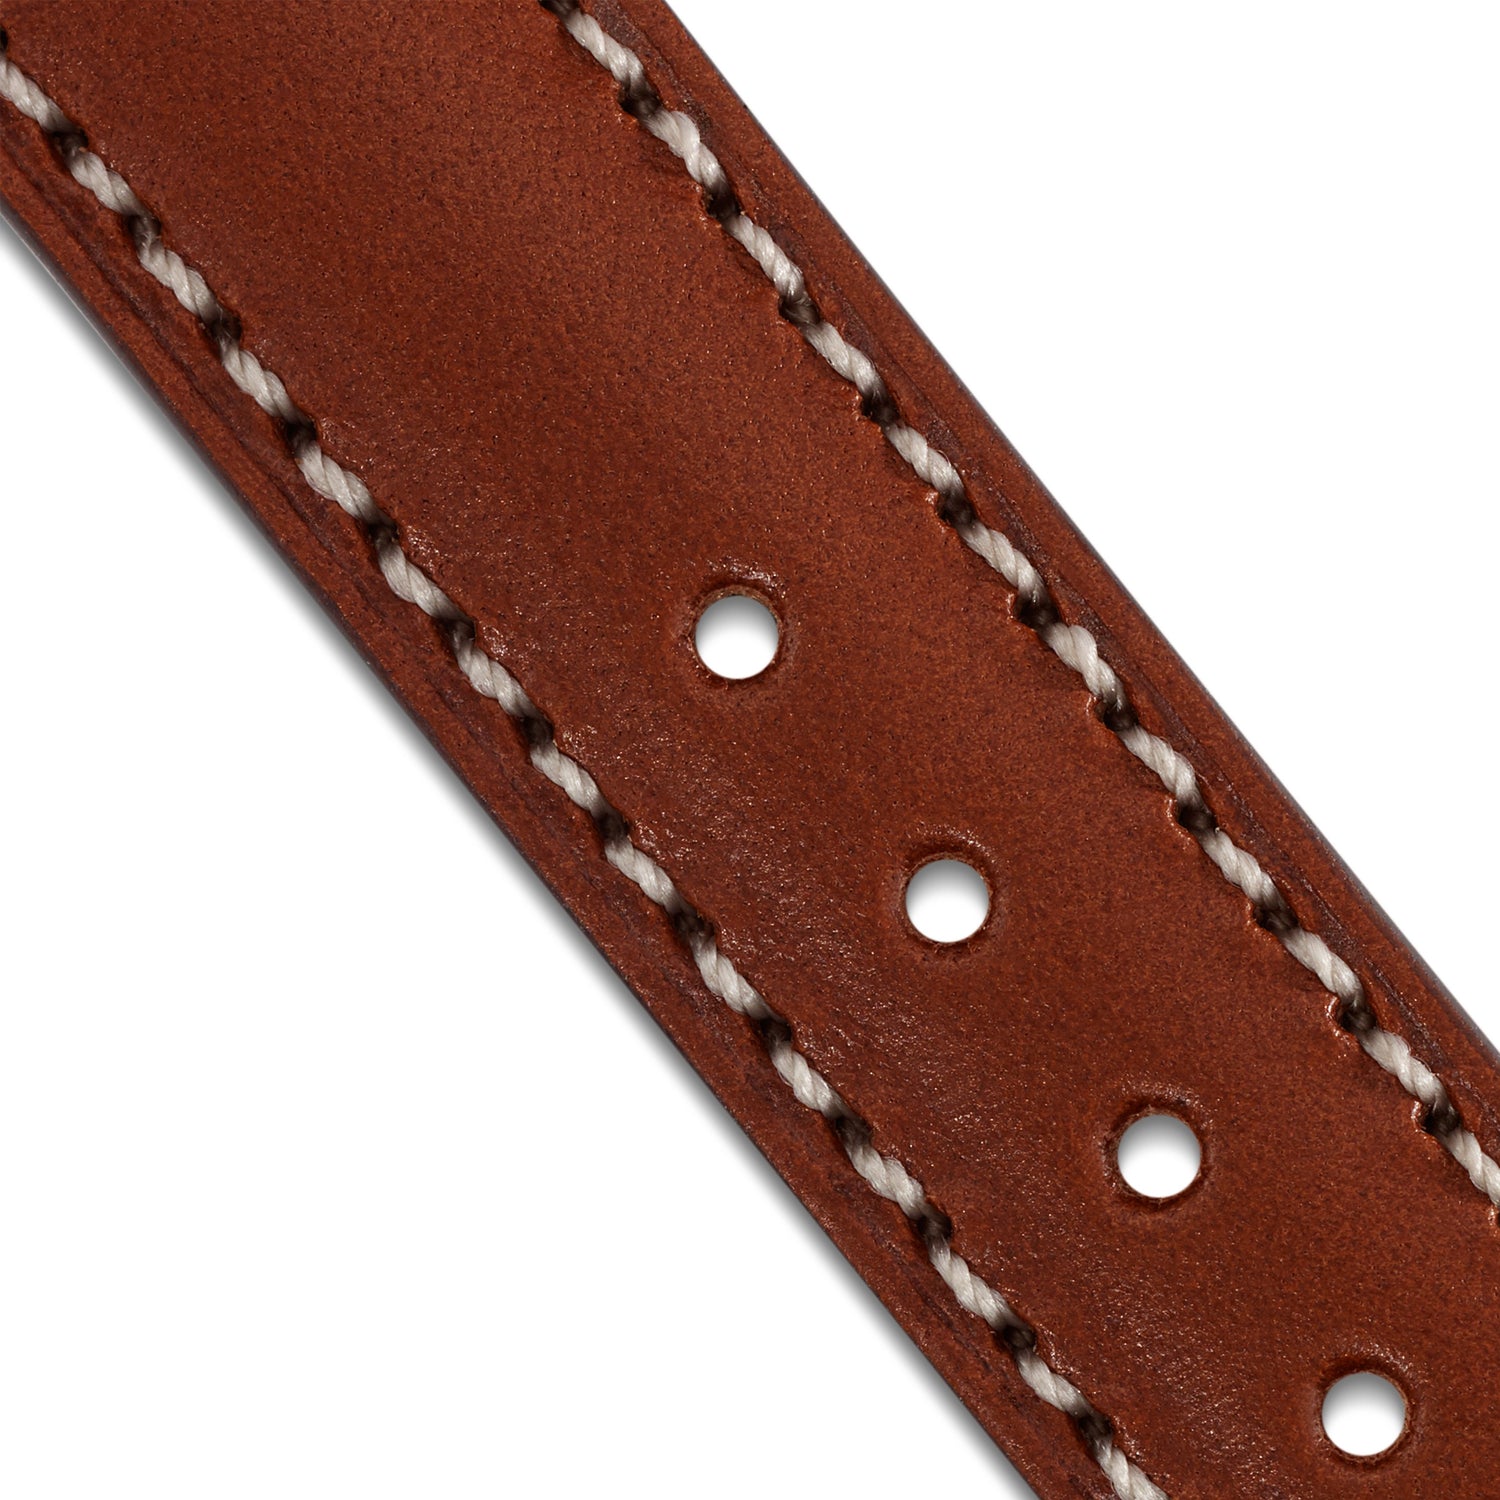 Bremont Chronometers Straps | Ladies | 16mm | Leather Regular Leather Ladies Strap - Tan